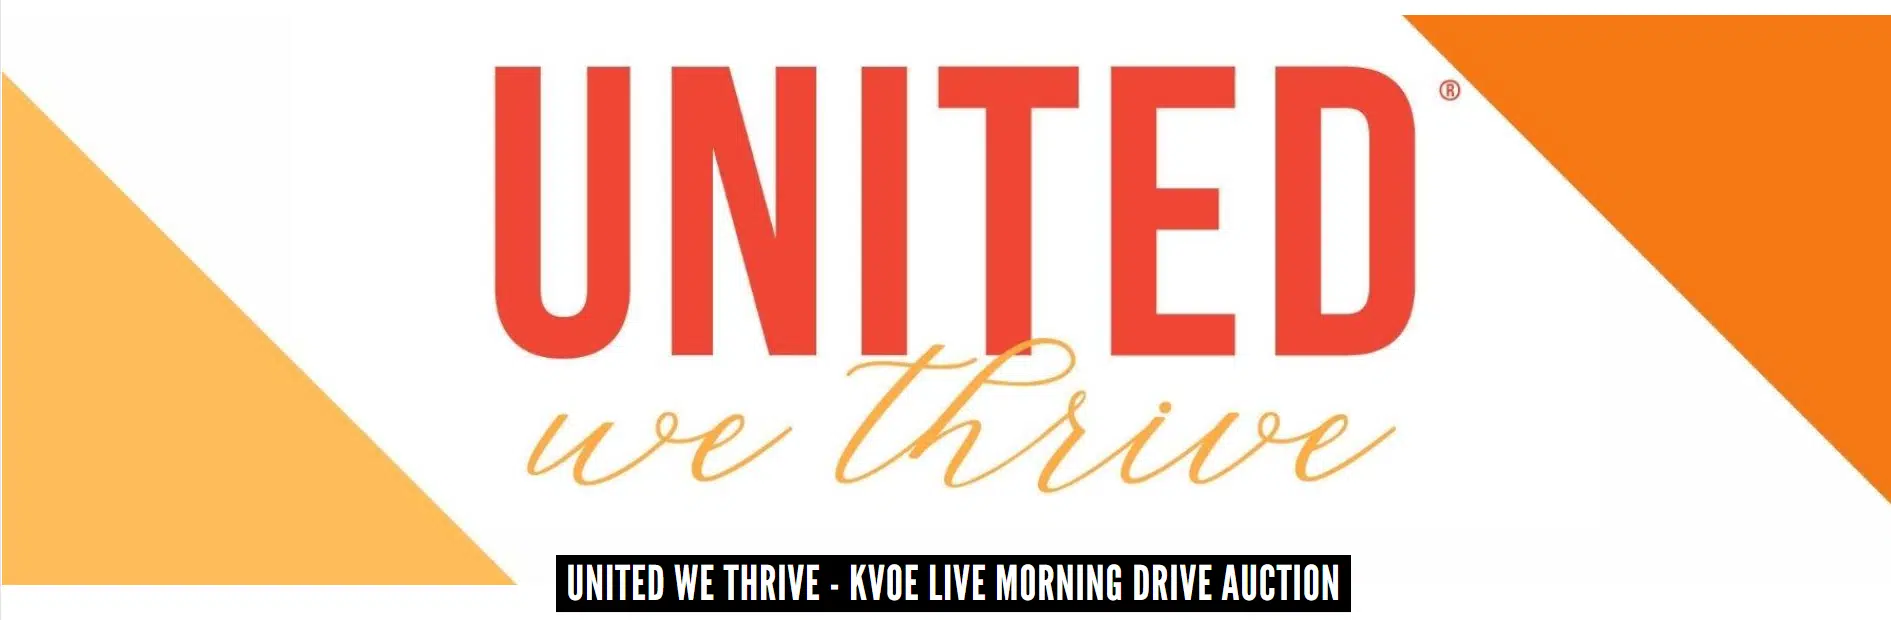 United Way, KVOE partnering on United We Thrive-KVOE Live Morning Drive auction starting Monday